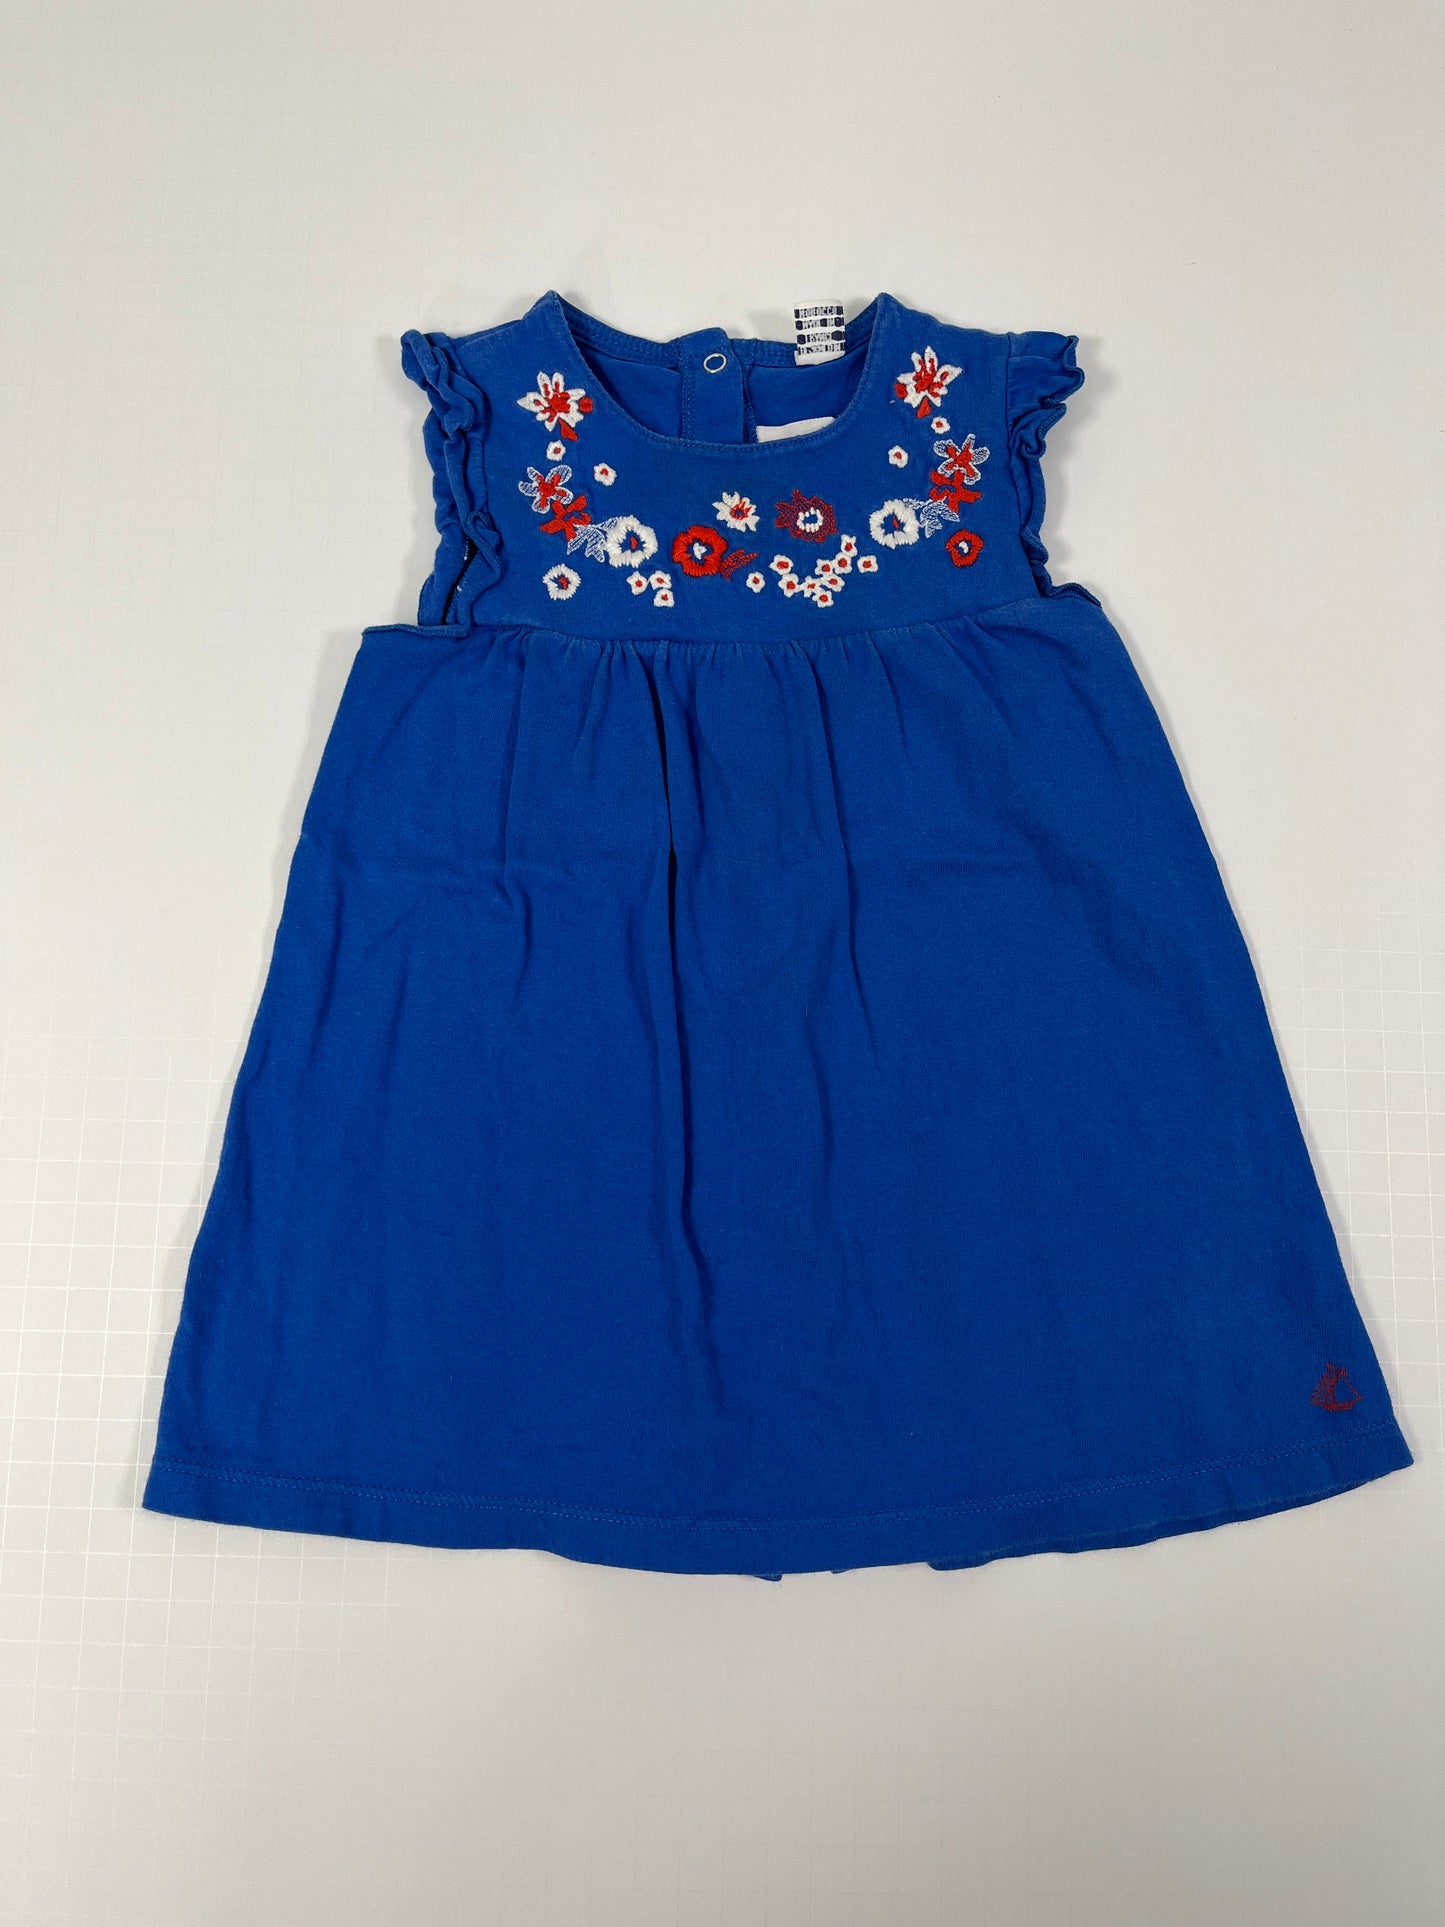 PPU 45242 18m girls Petit Batuea blue embroidered floral dress